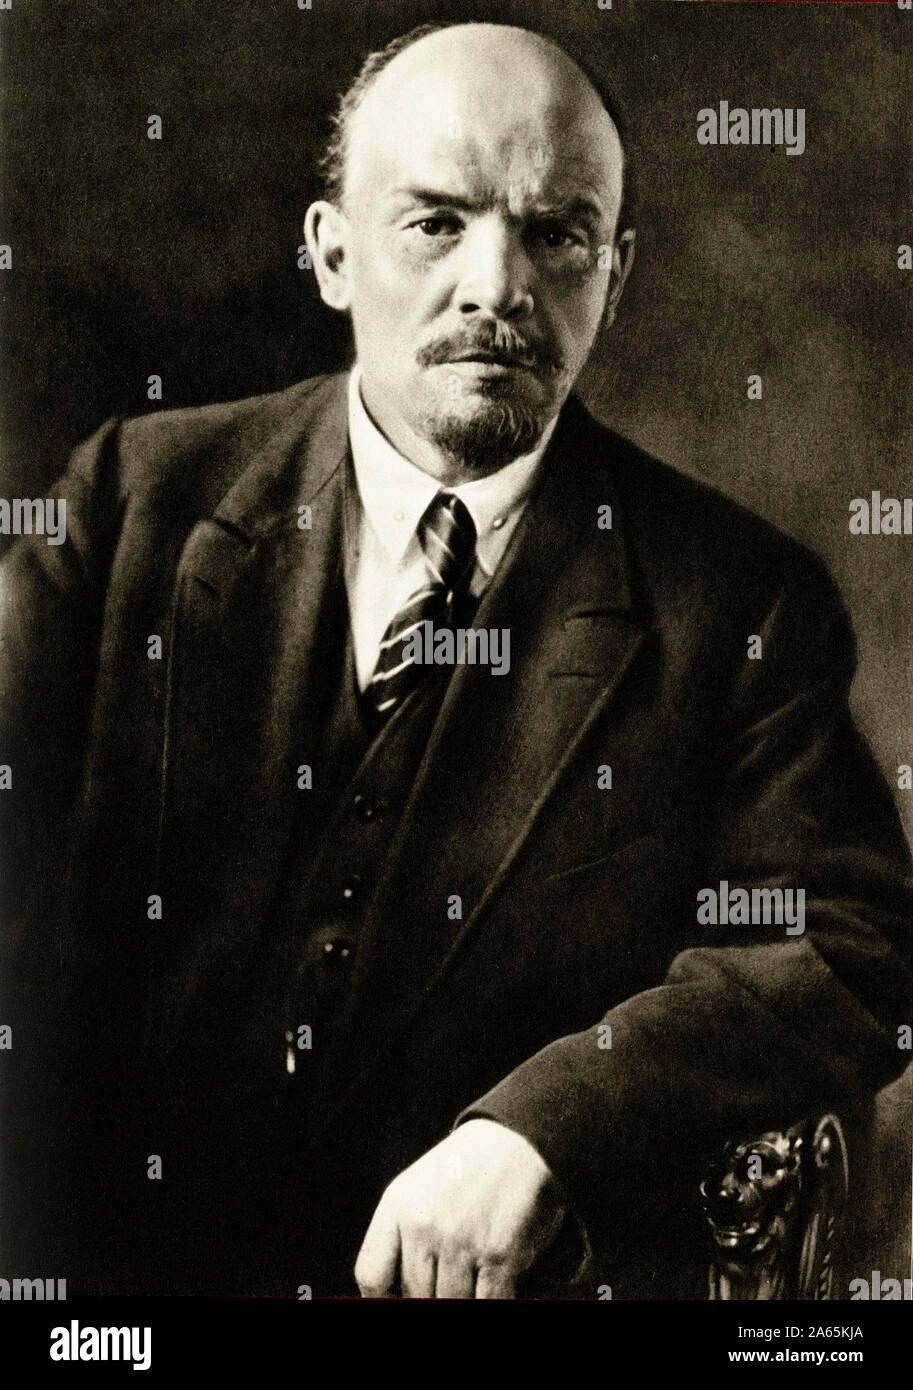 Lenin - Lenine (Vladimir Ilitch Oulianov dit, 1870-1924) juillet 1920, Moscou - Stockfoto